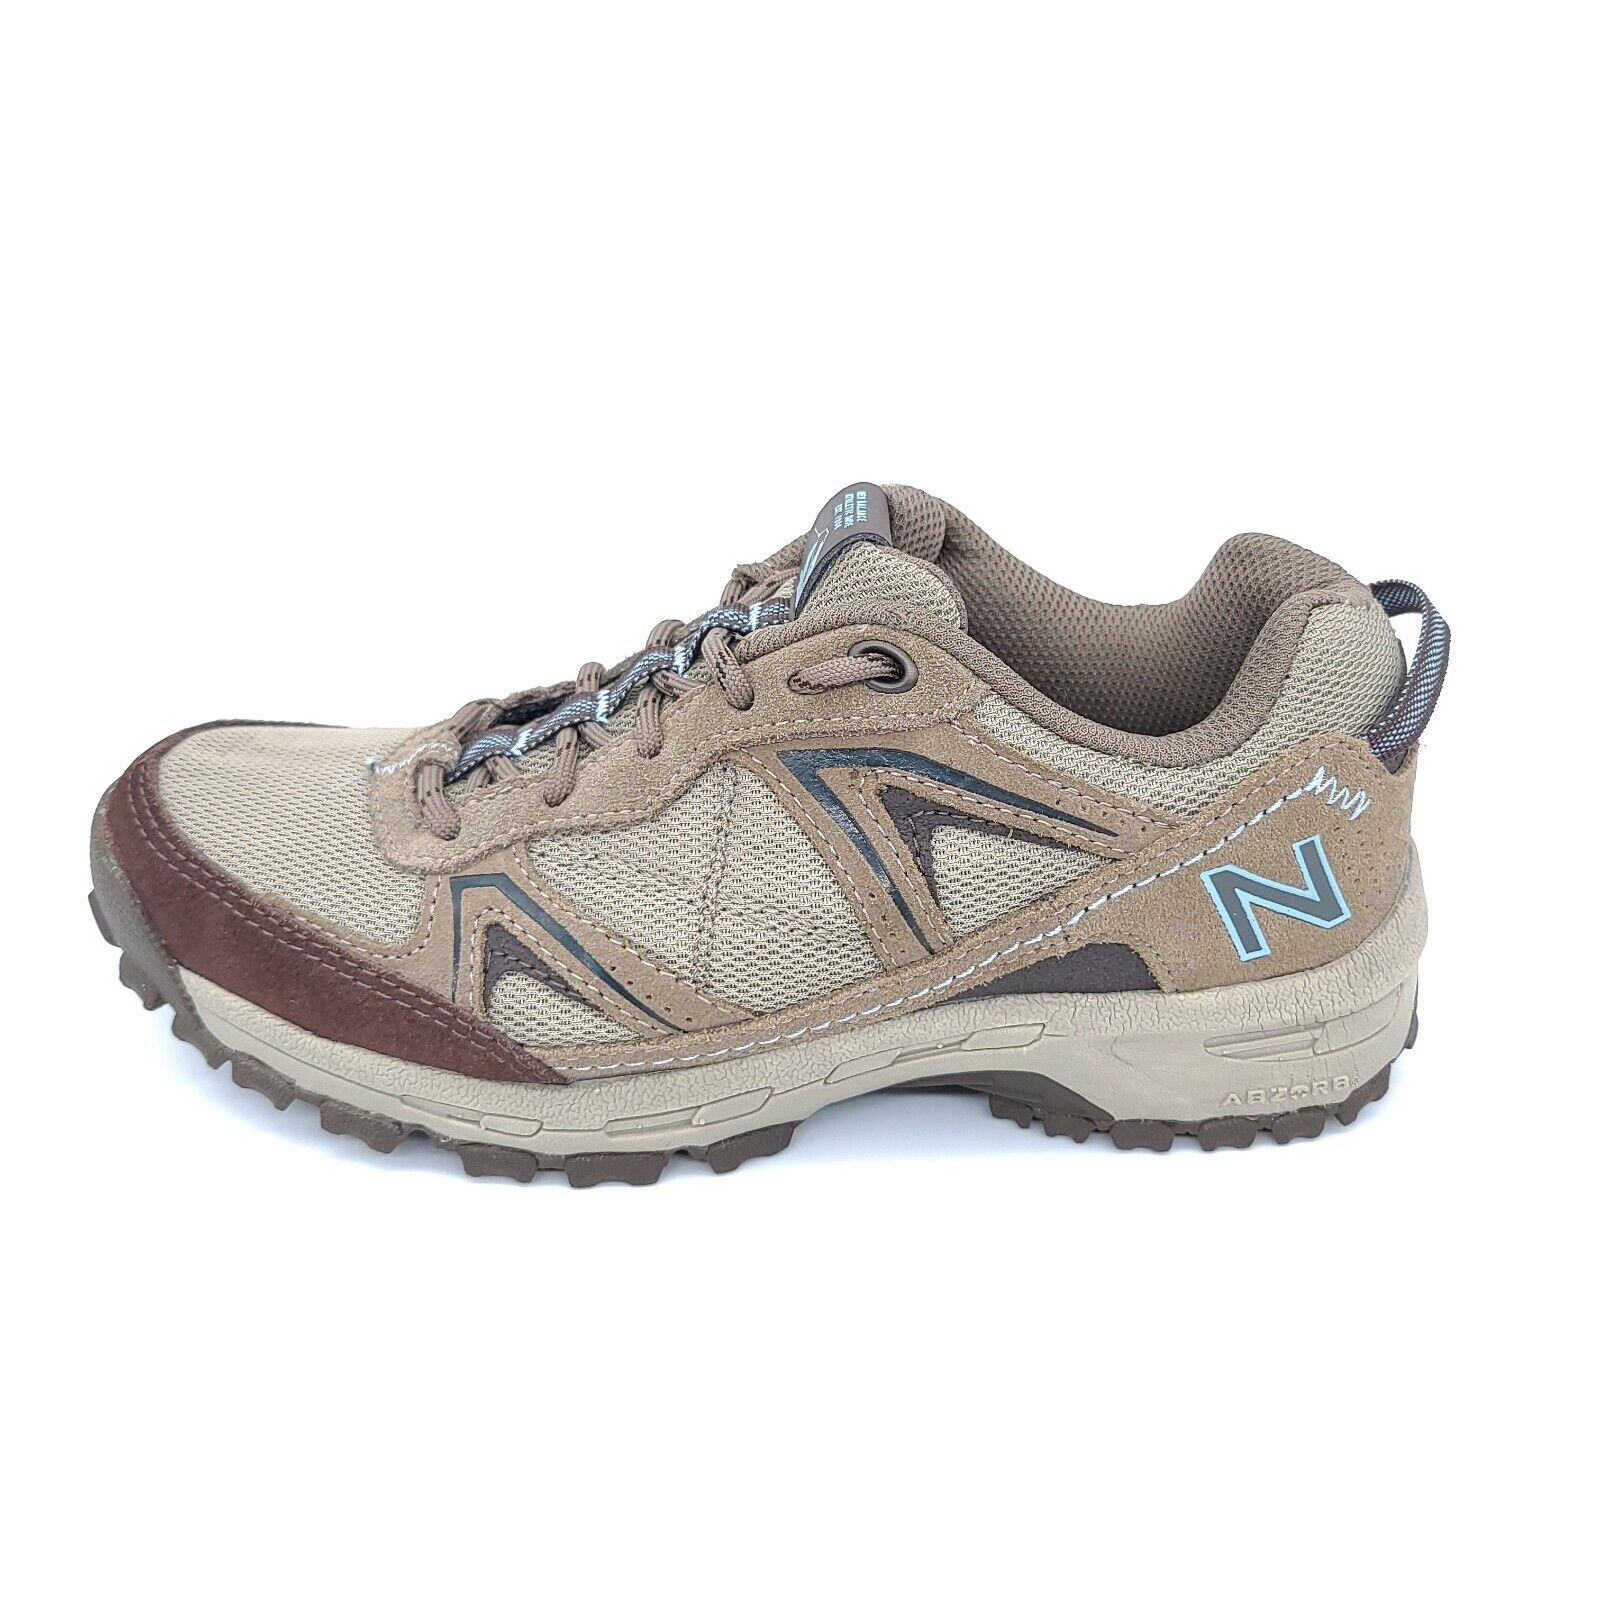 George Hanbury Risikabel nedbrydes New Balance Shoes Women's 7 659 Hiking Trail Brown | eBay